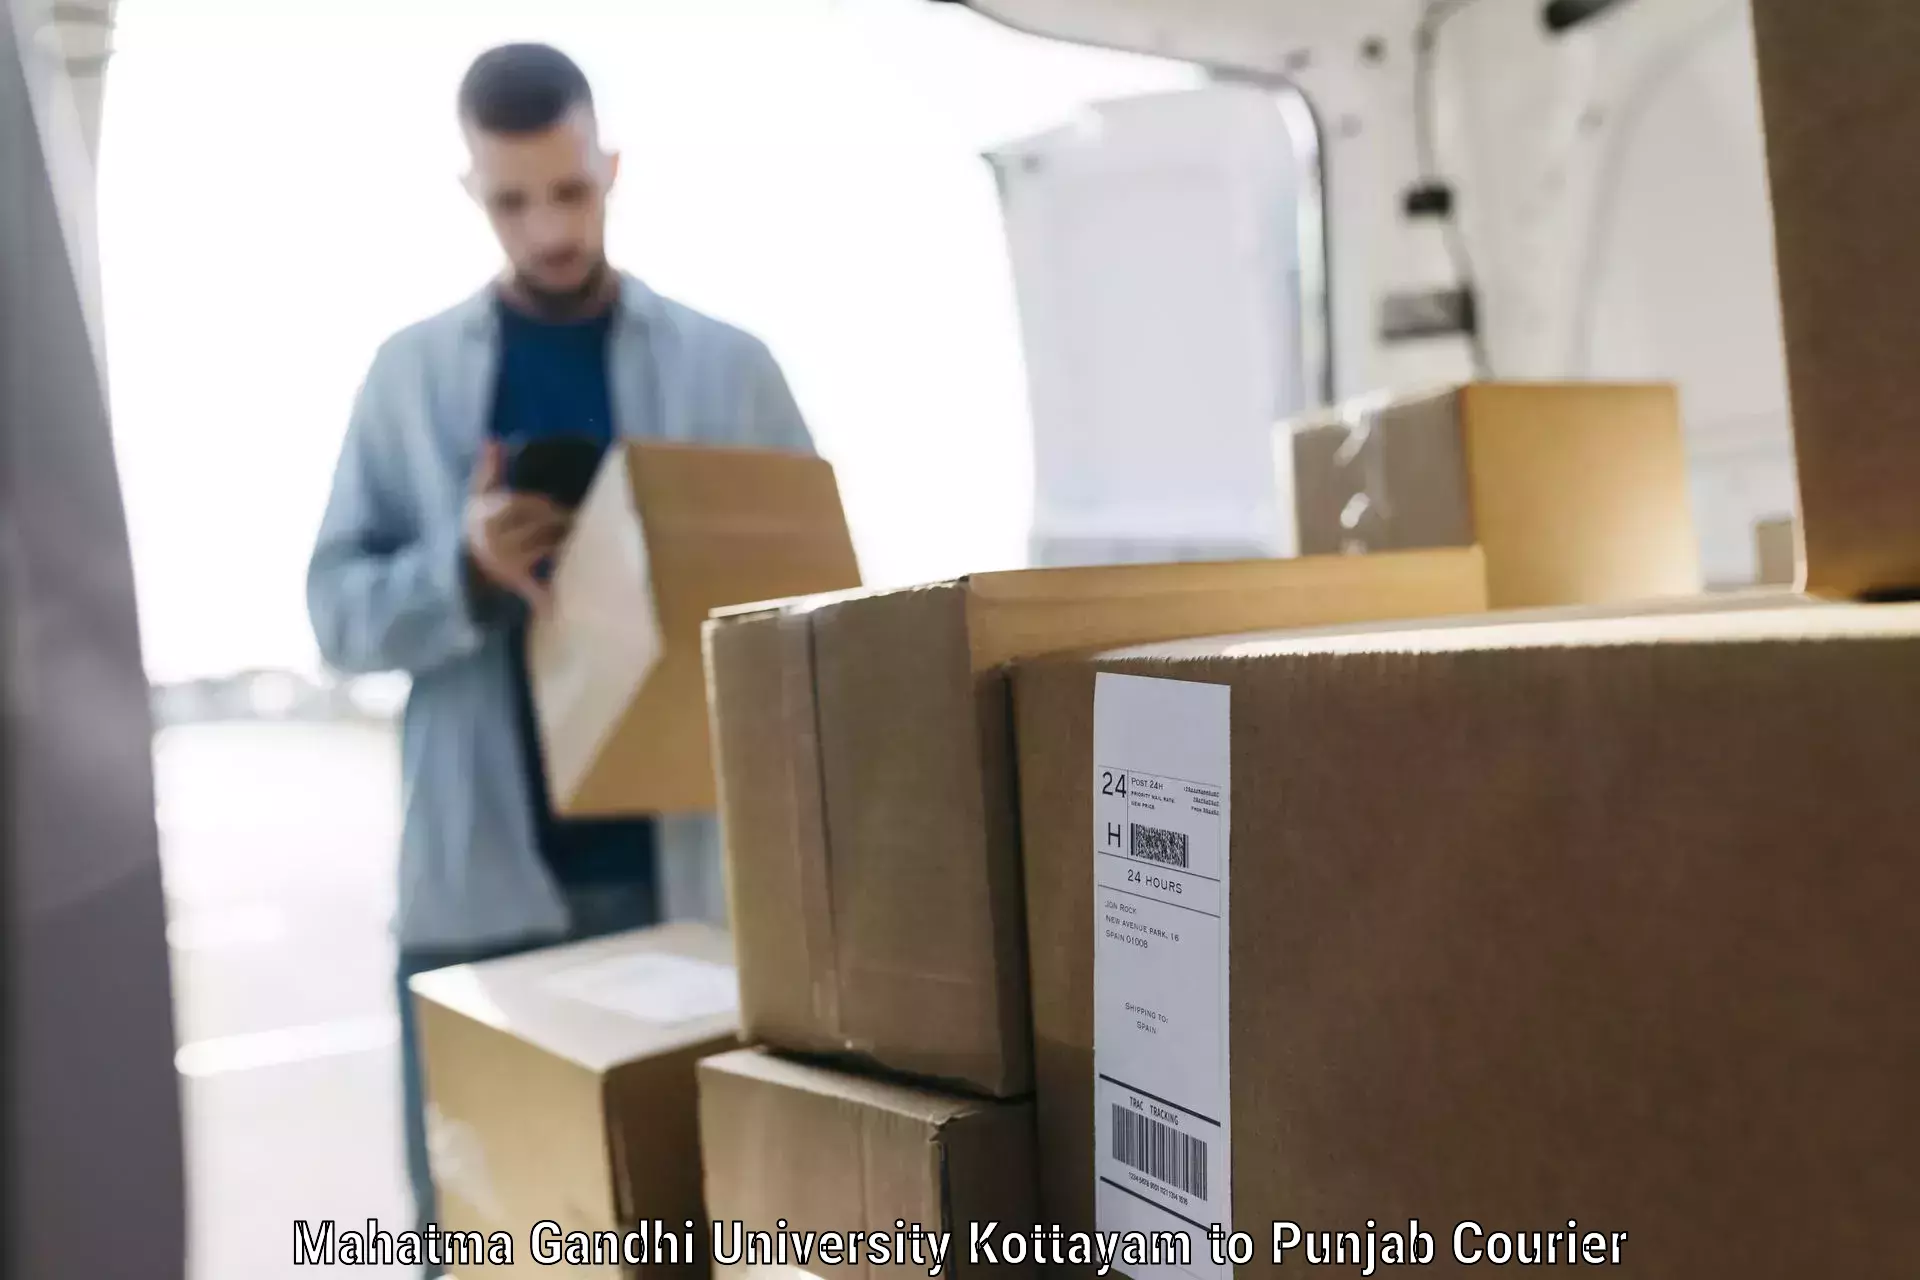 Personal effects shipping in Mahatma Gandhi University Kottayam to Punjab